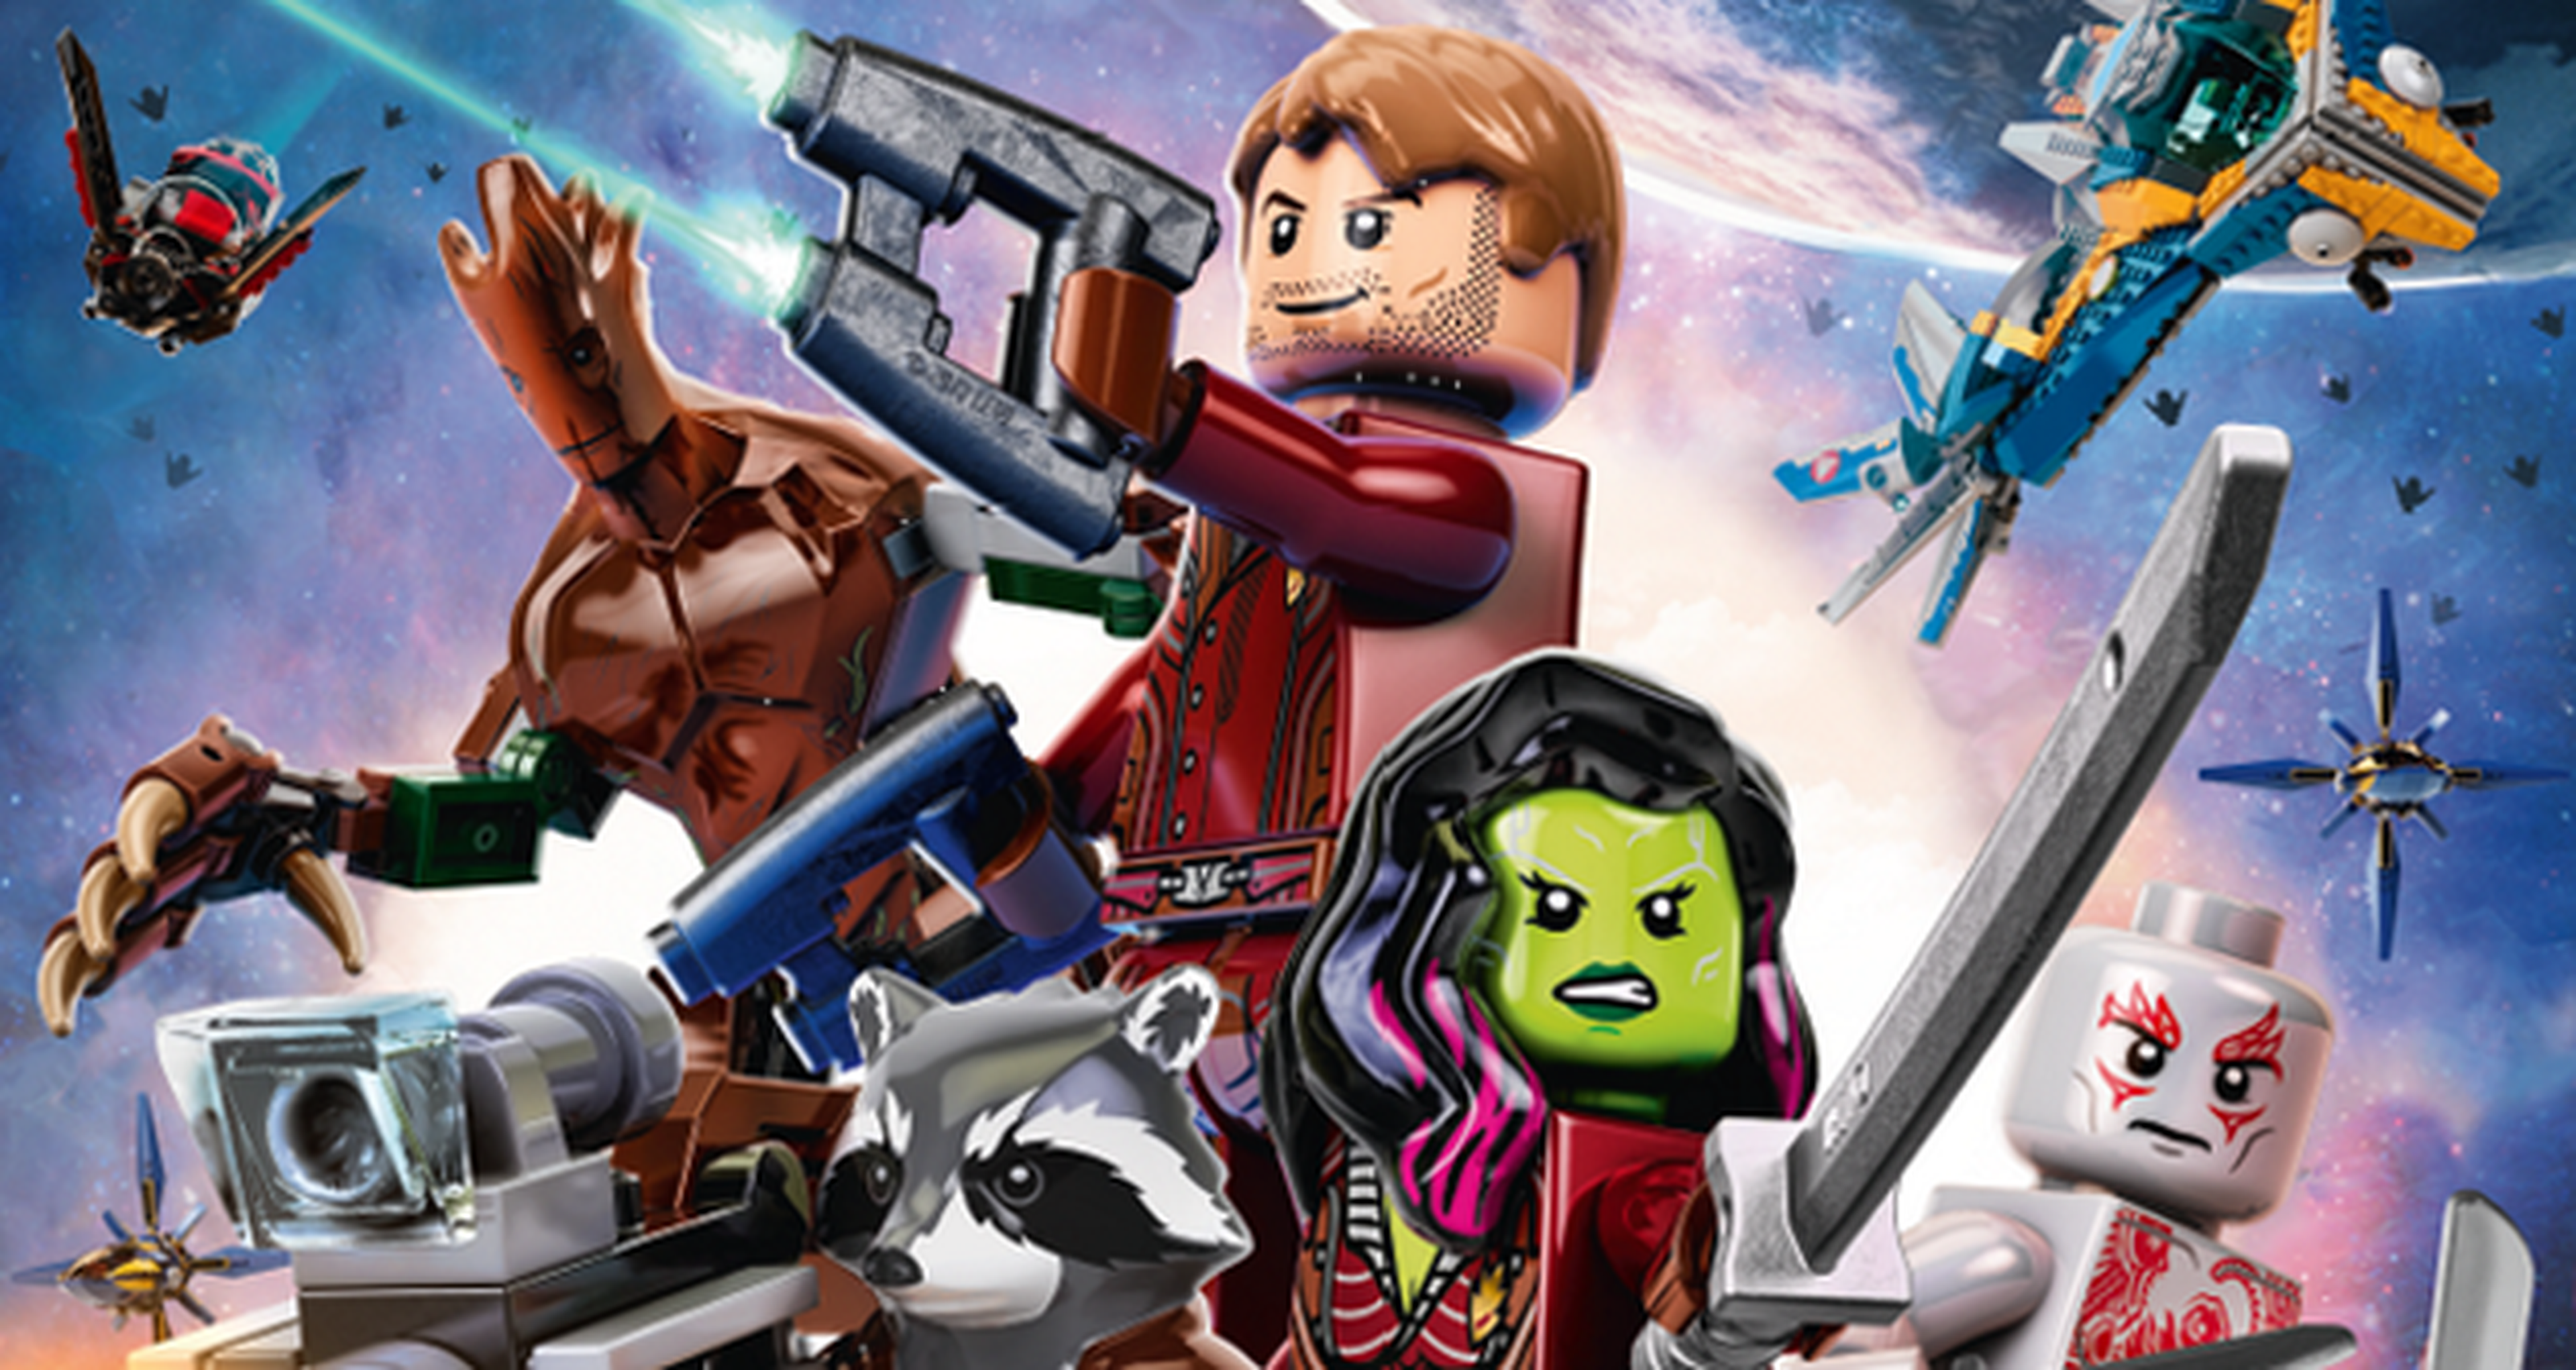 Poster de LEGO de Guardianes de la Galaxia